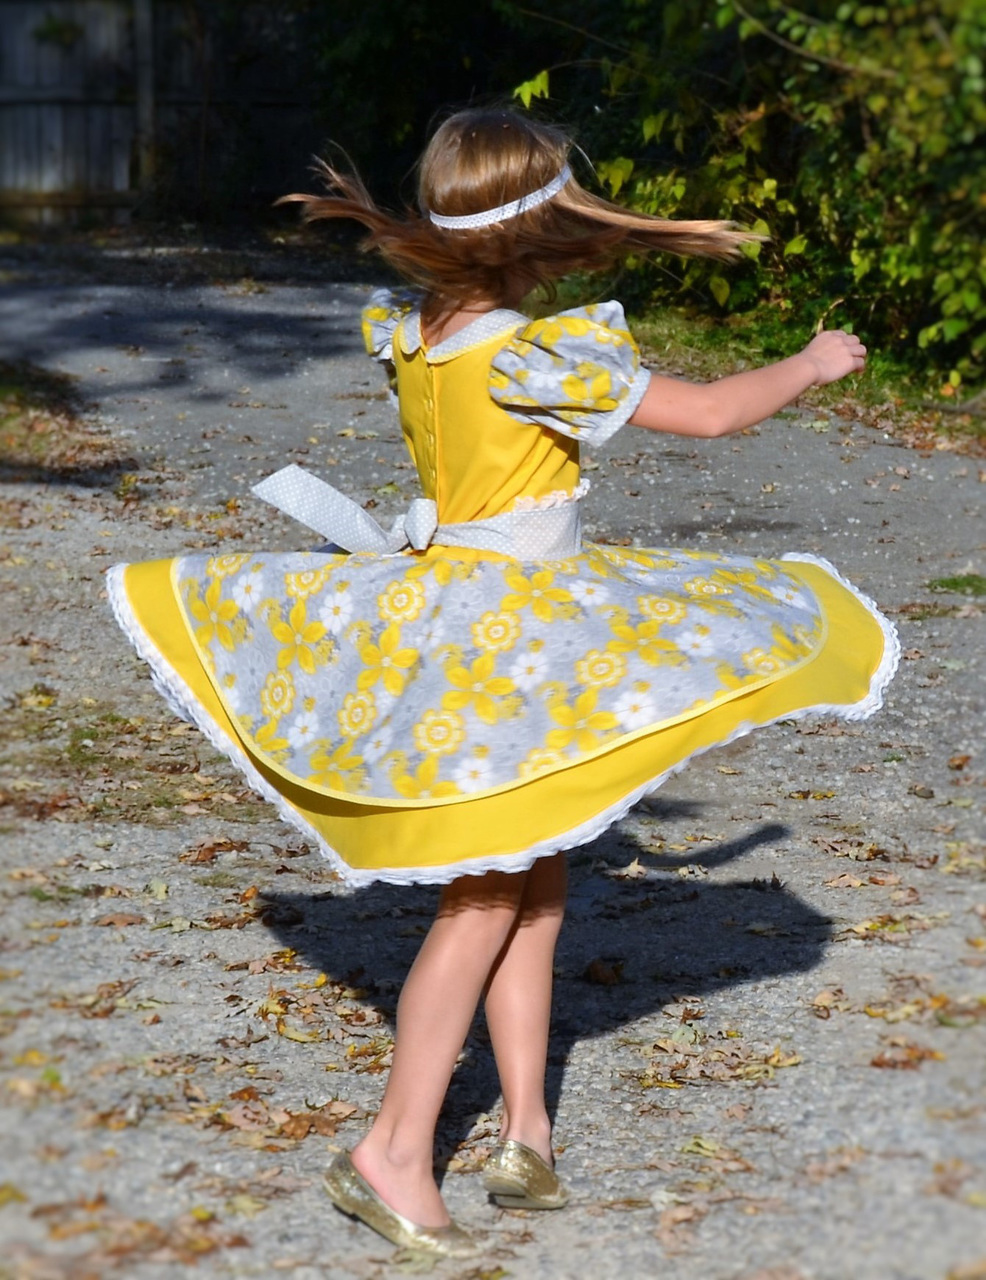 The Clementine Twirly Dress - PDF Sewing Pattern 2T - 10 Kids